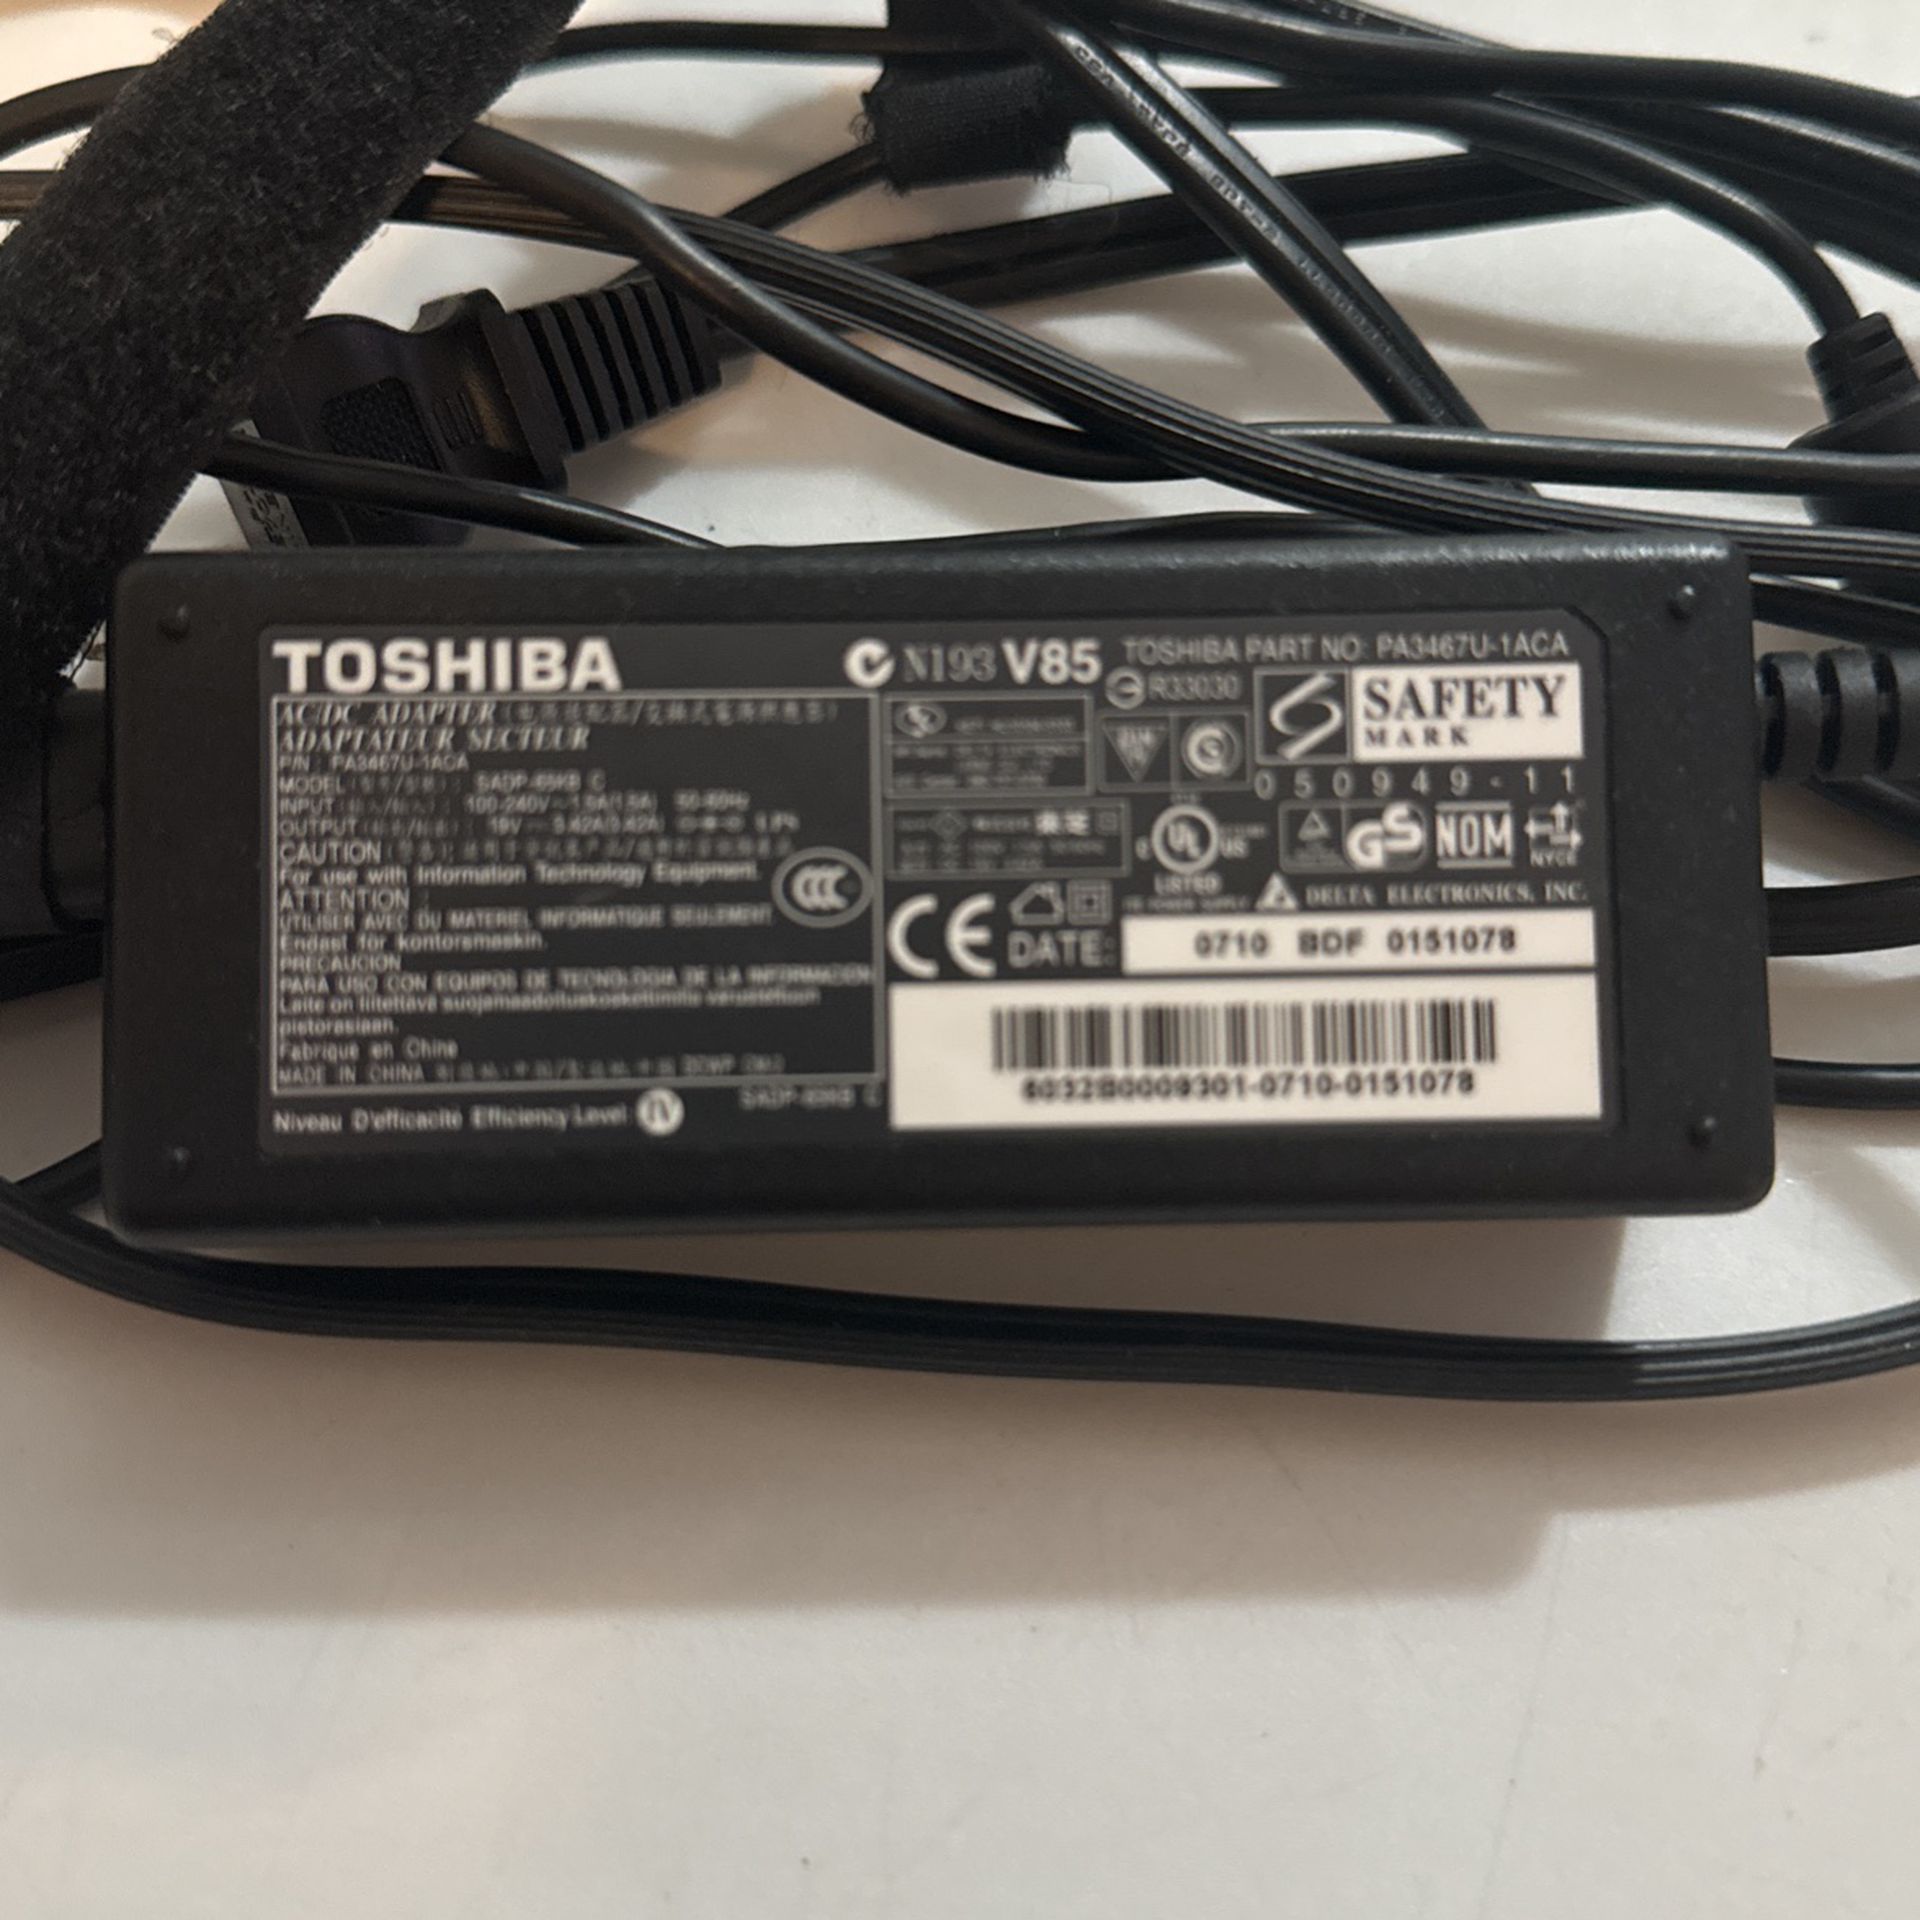 Toshiba Power Cable (N193 V85 Part No: PA3467U-1ACA)